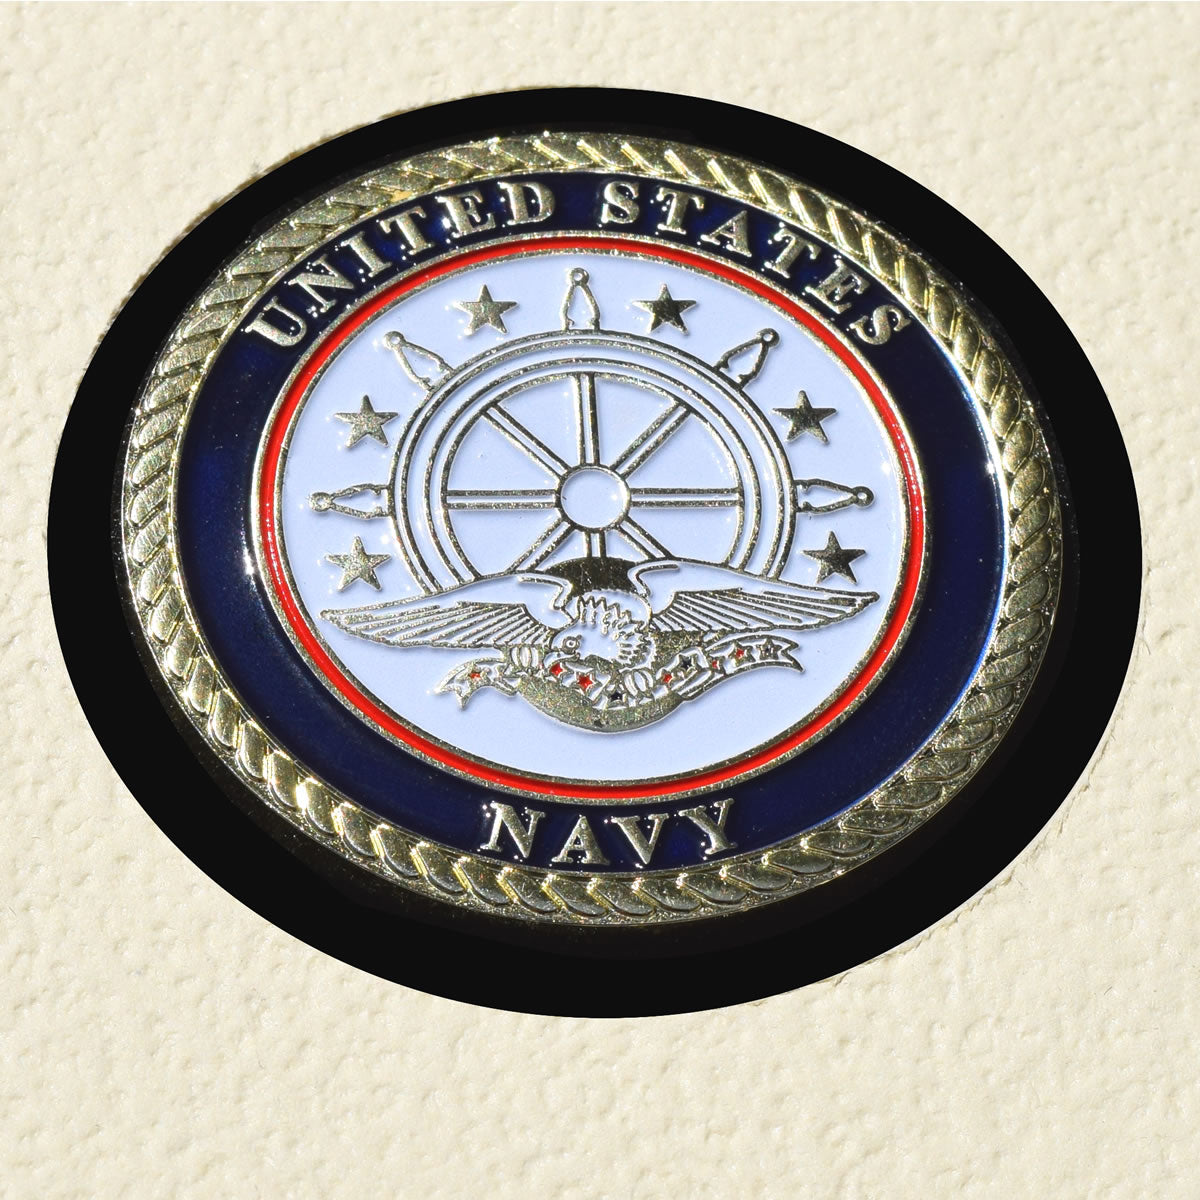 USS O'HARE DD-889 Detailed Coin